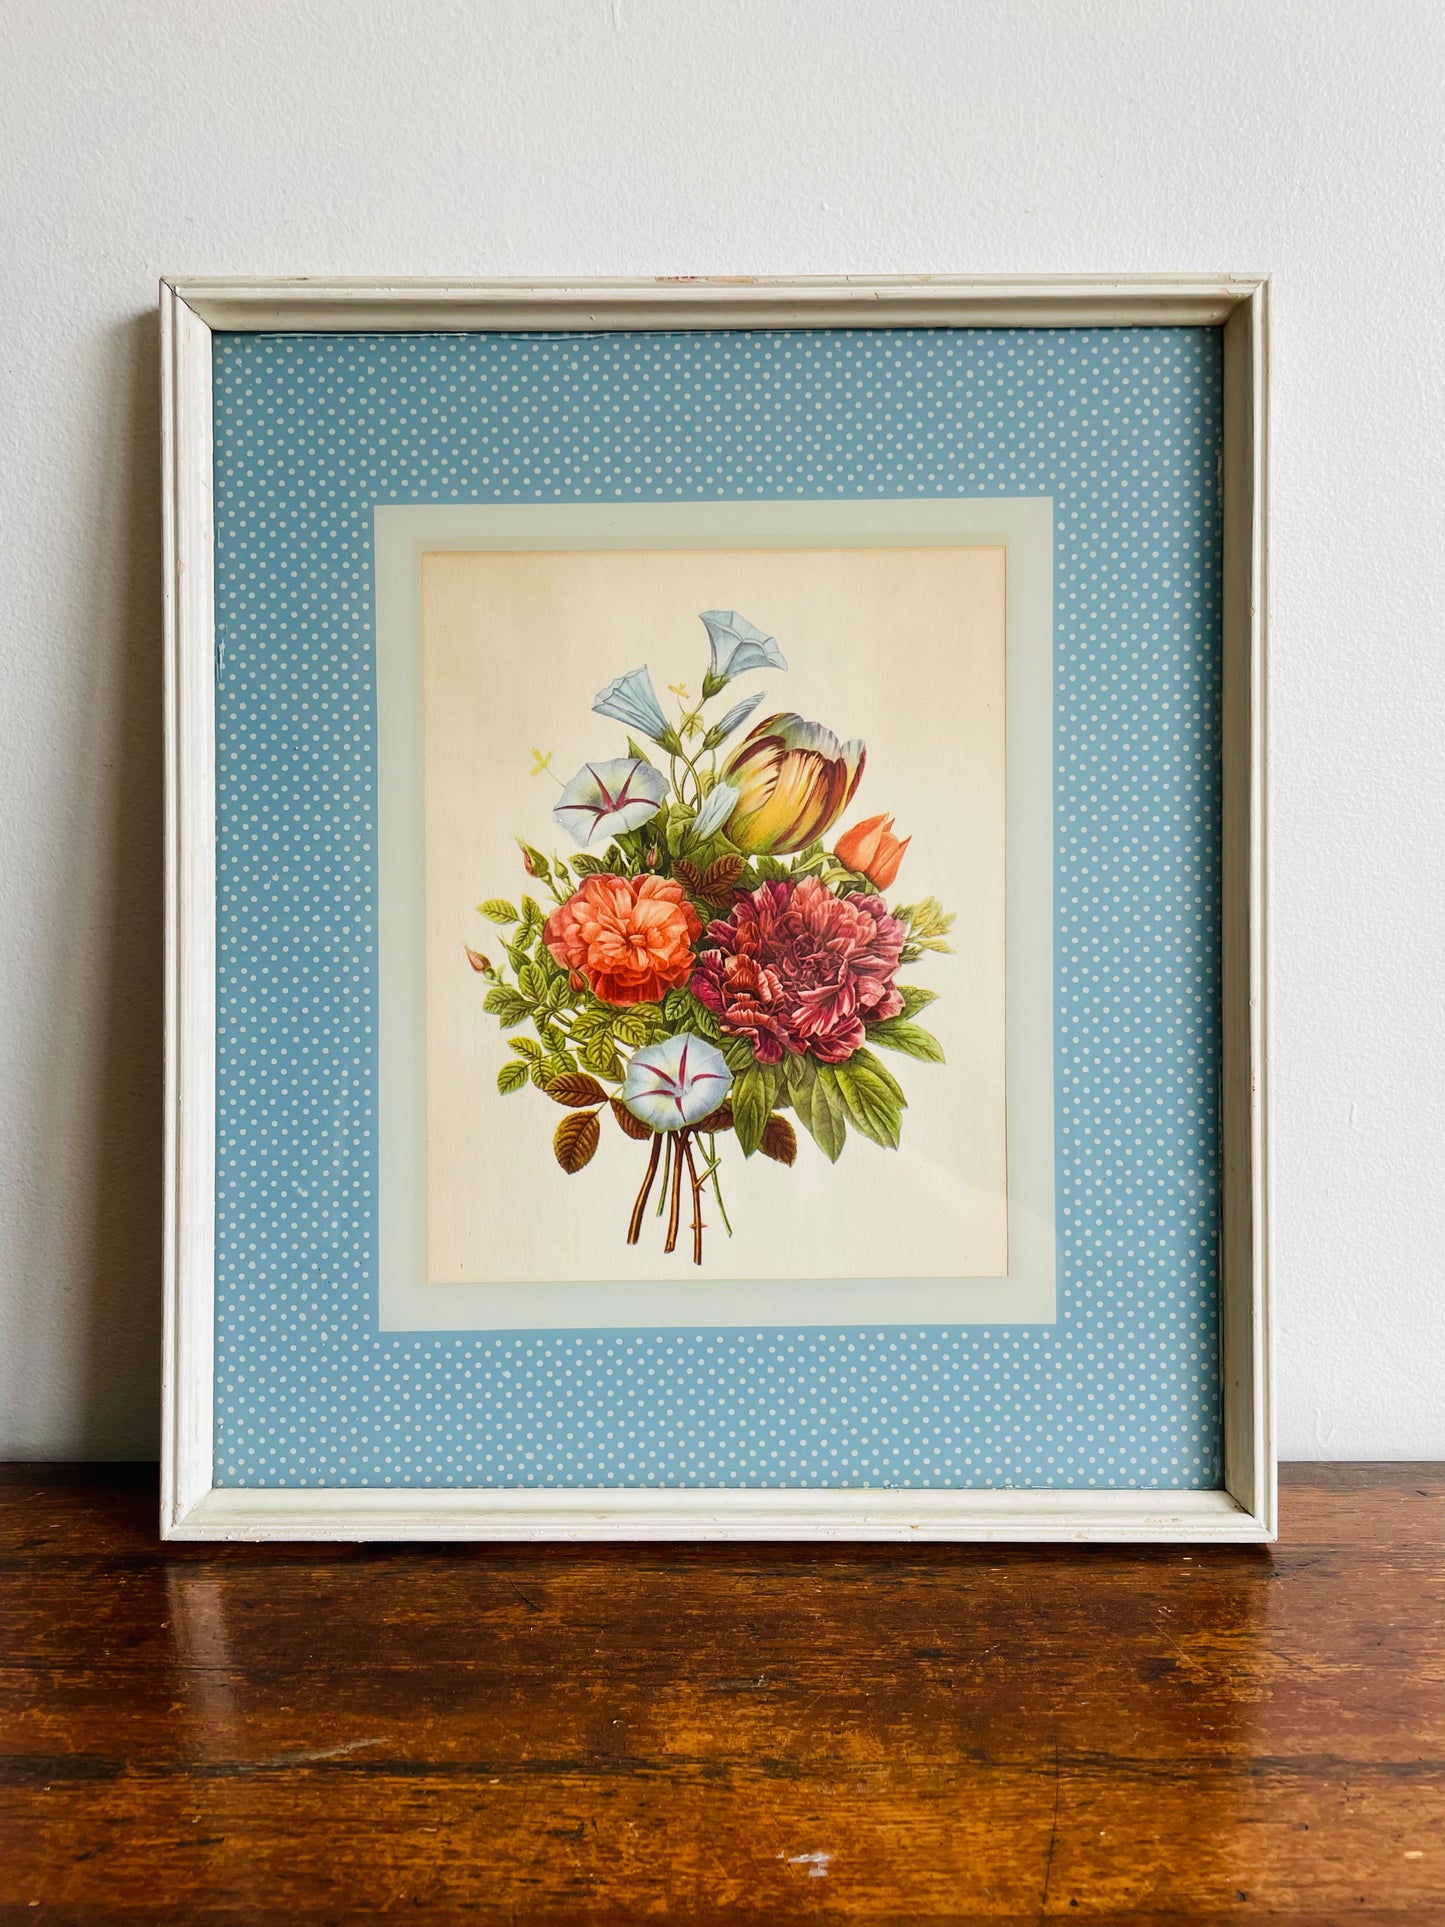 Framed Bouquet of Flowers - Botanical Print by J.L. Prevost